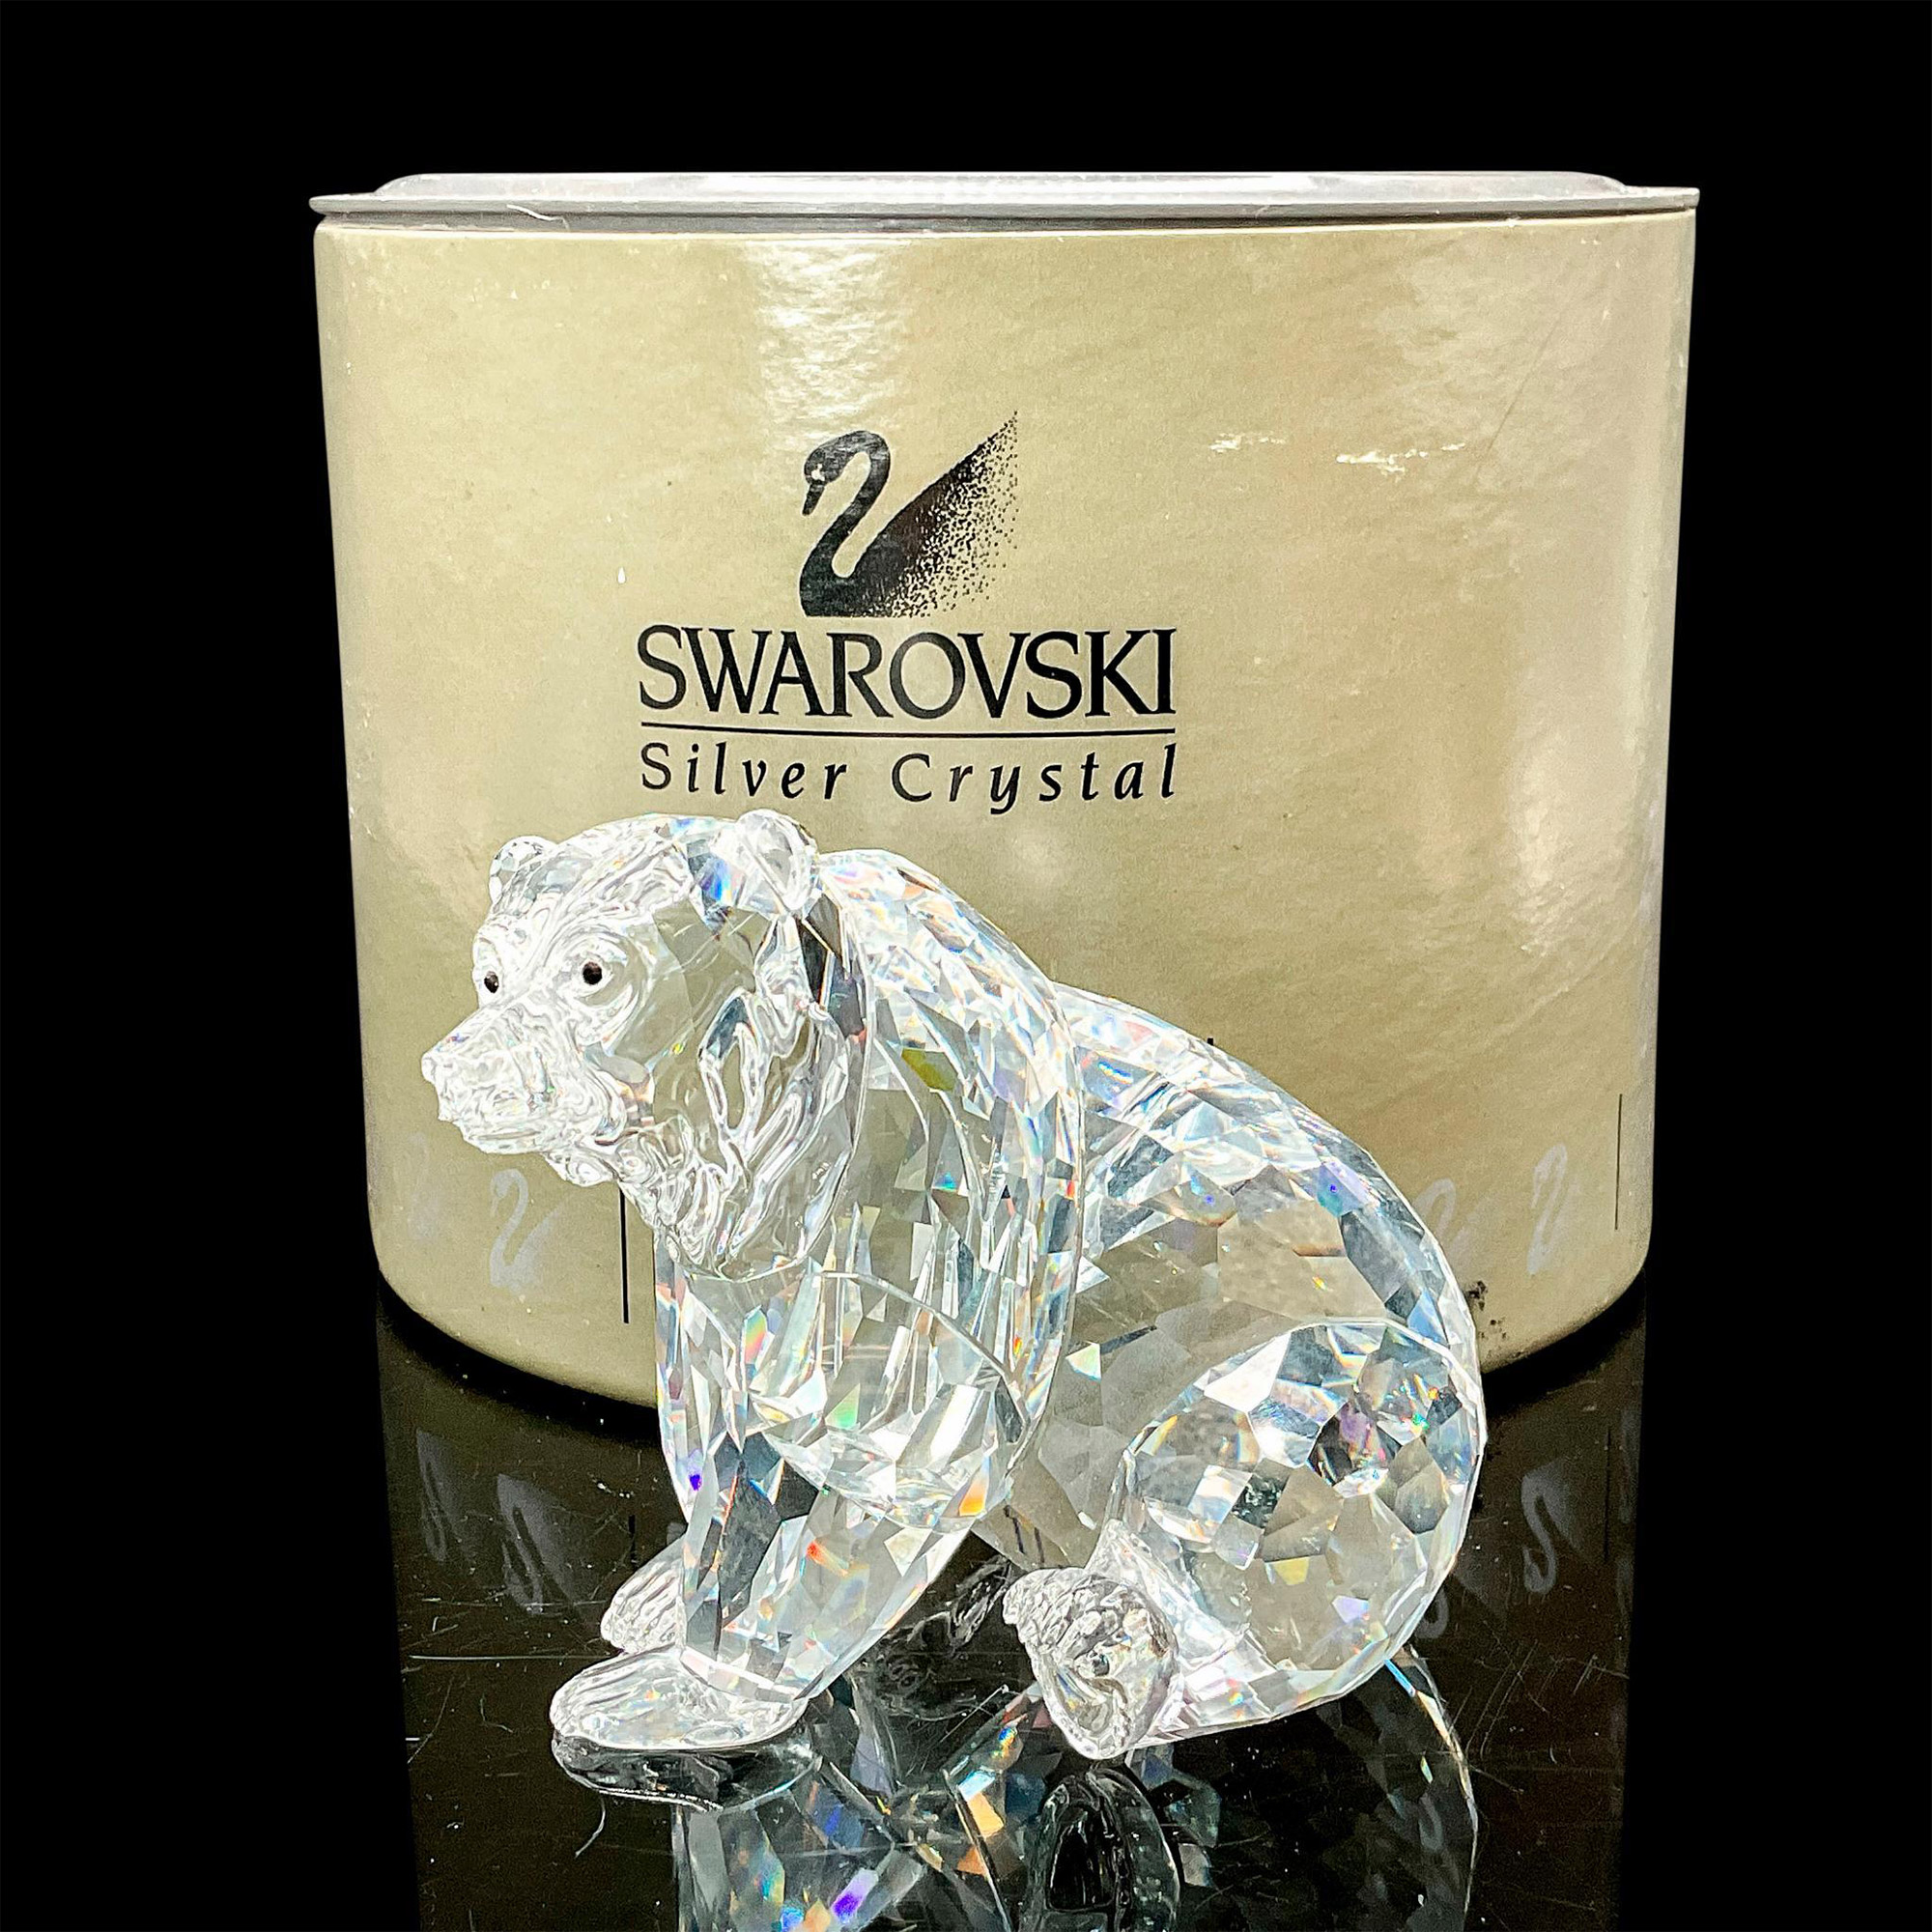 Swarovski Silver Crystal Figurine, Grizzly Bear - Image 4 of 4